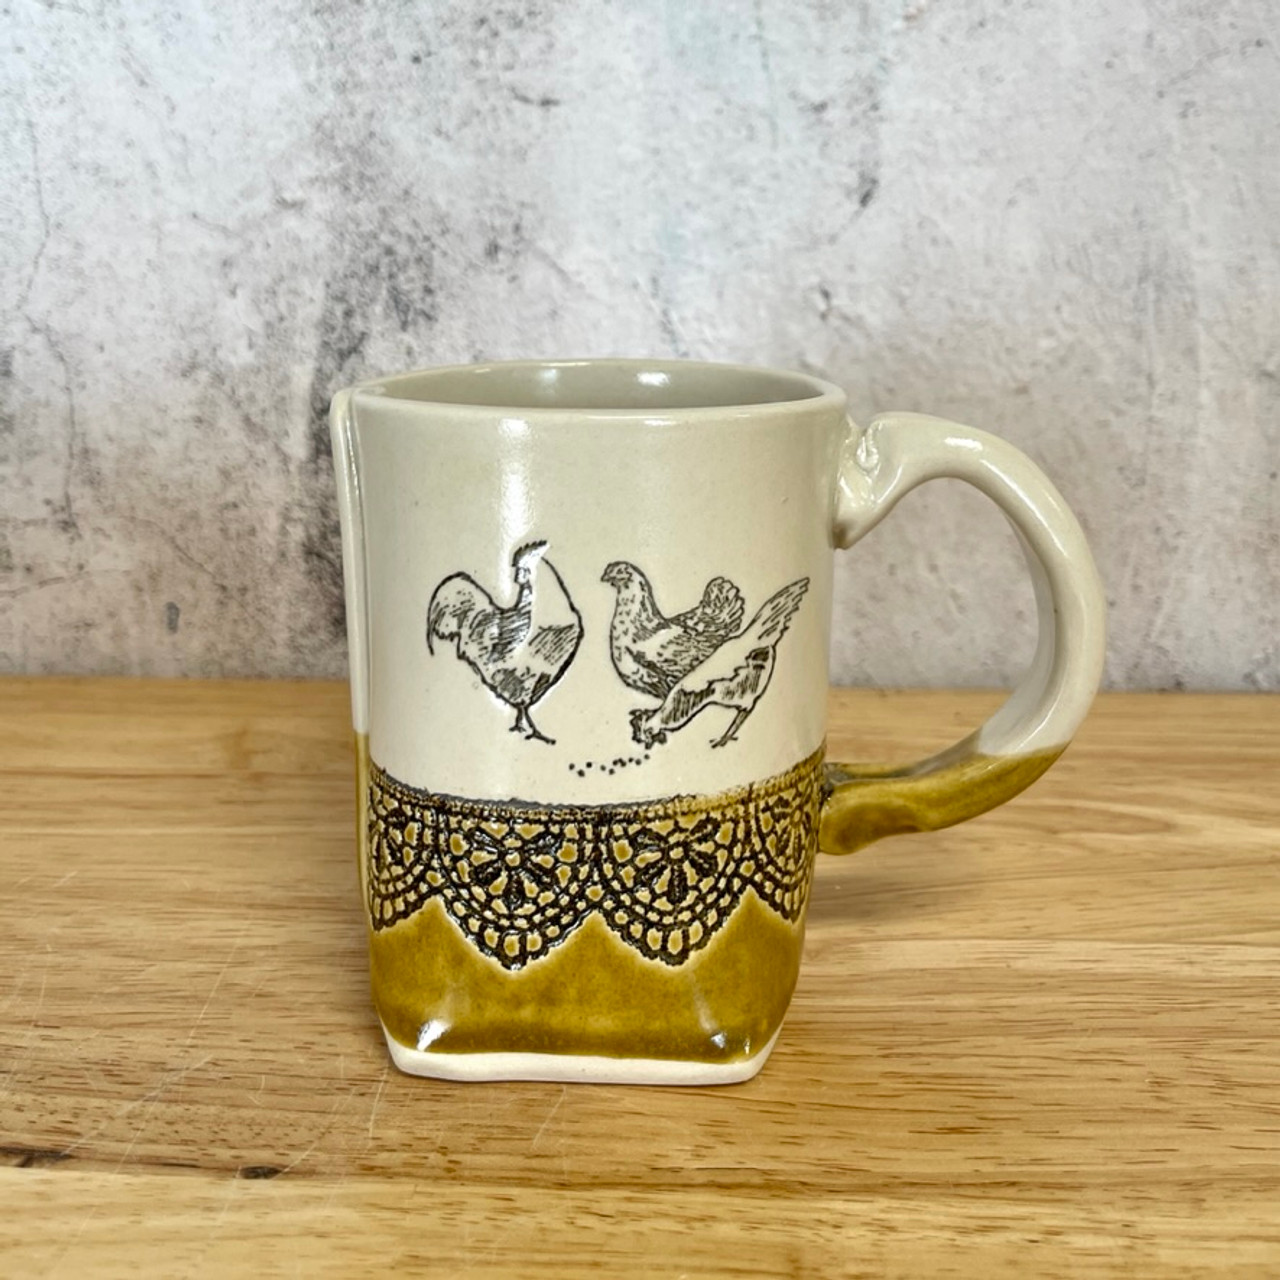 Handmade Pottery Chicken Mug. Adorable!